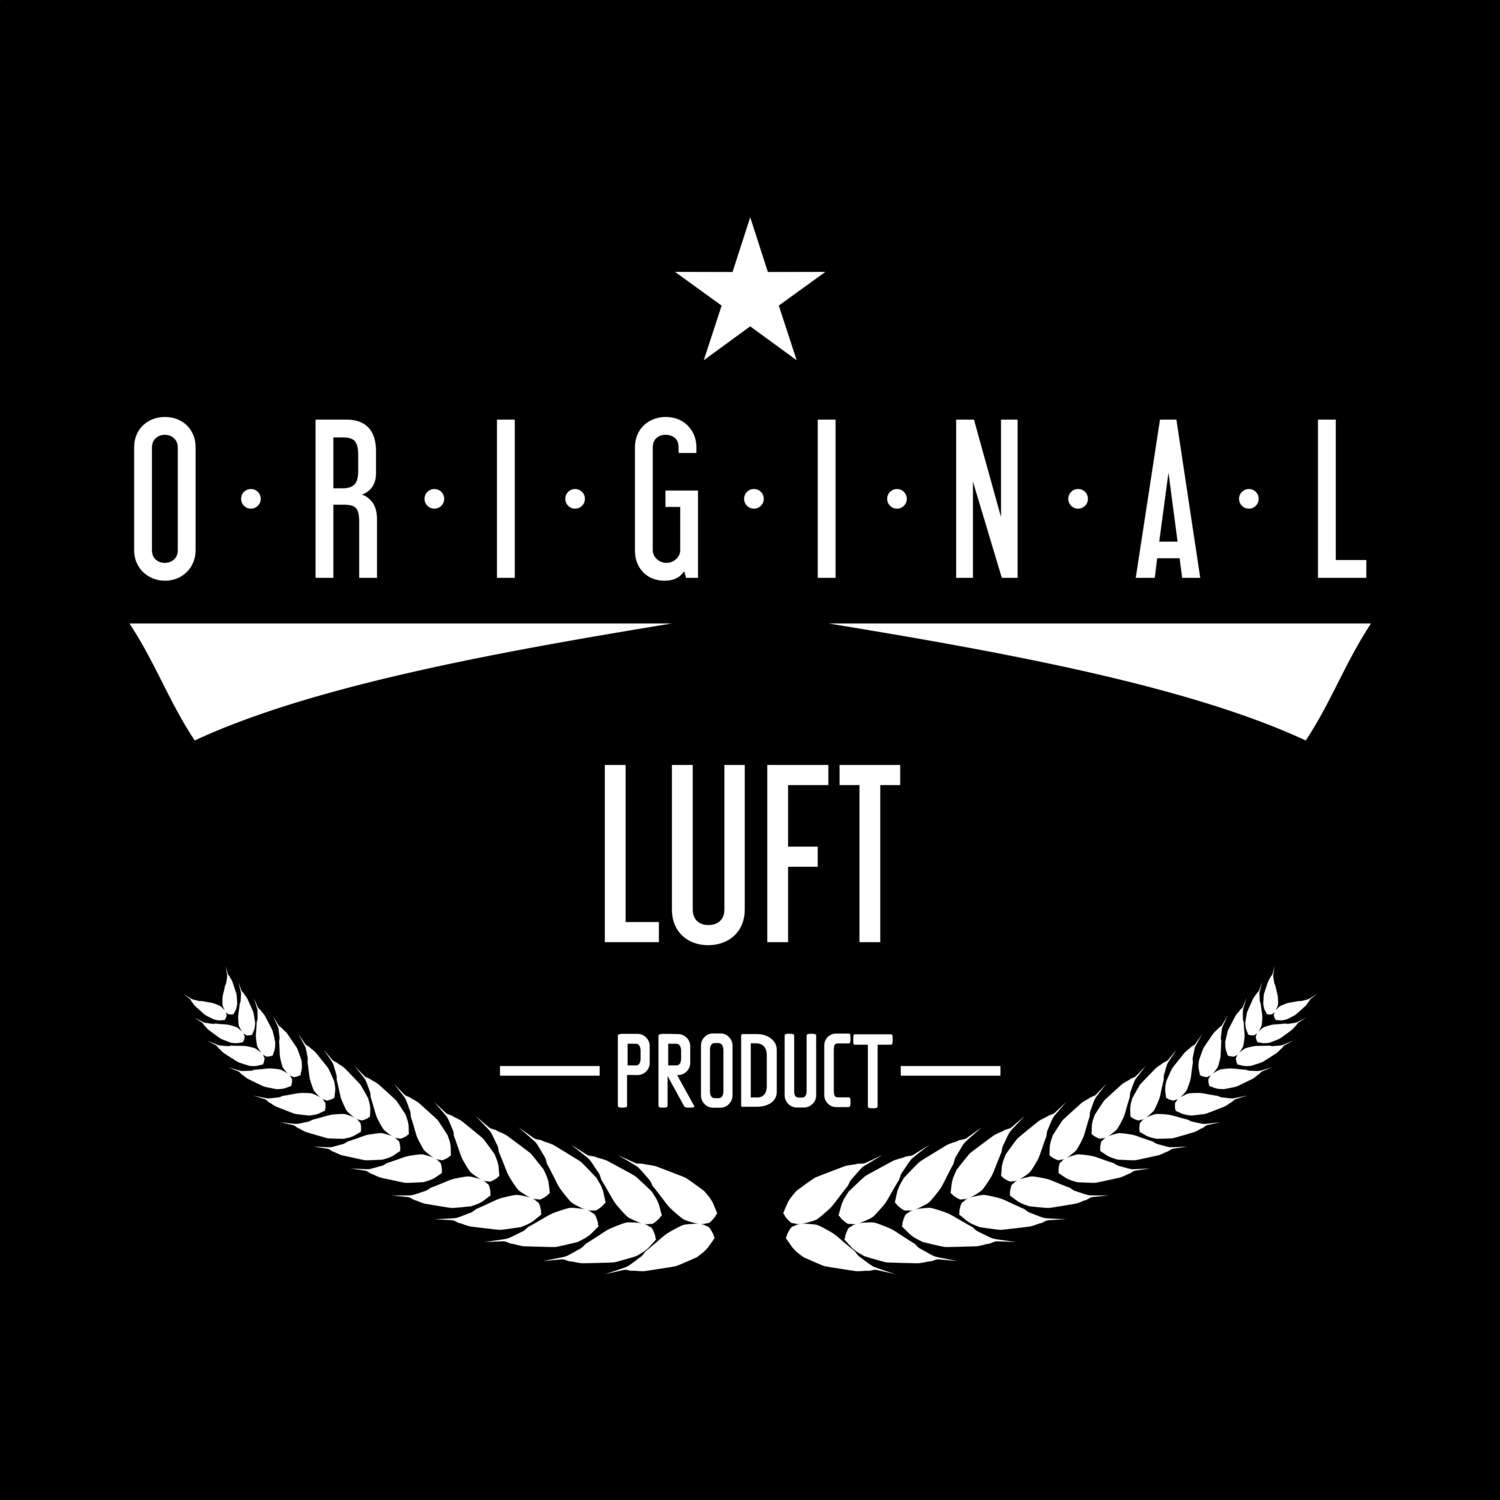 Luft T-Shirt »Original Product«